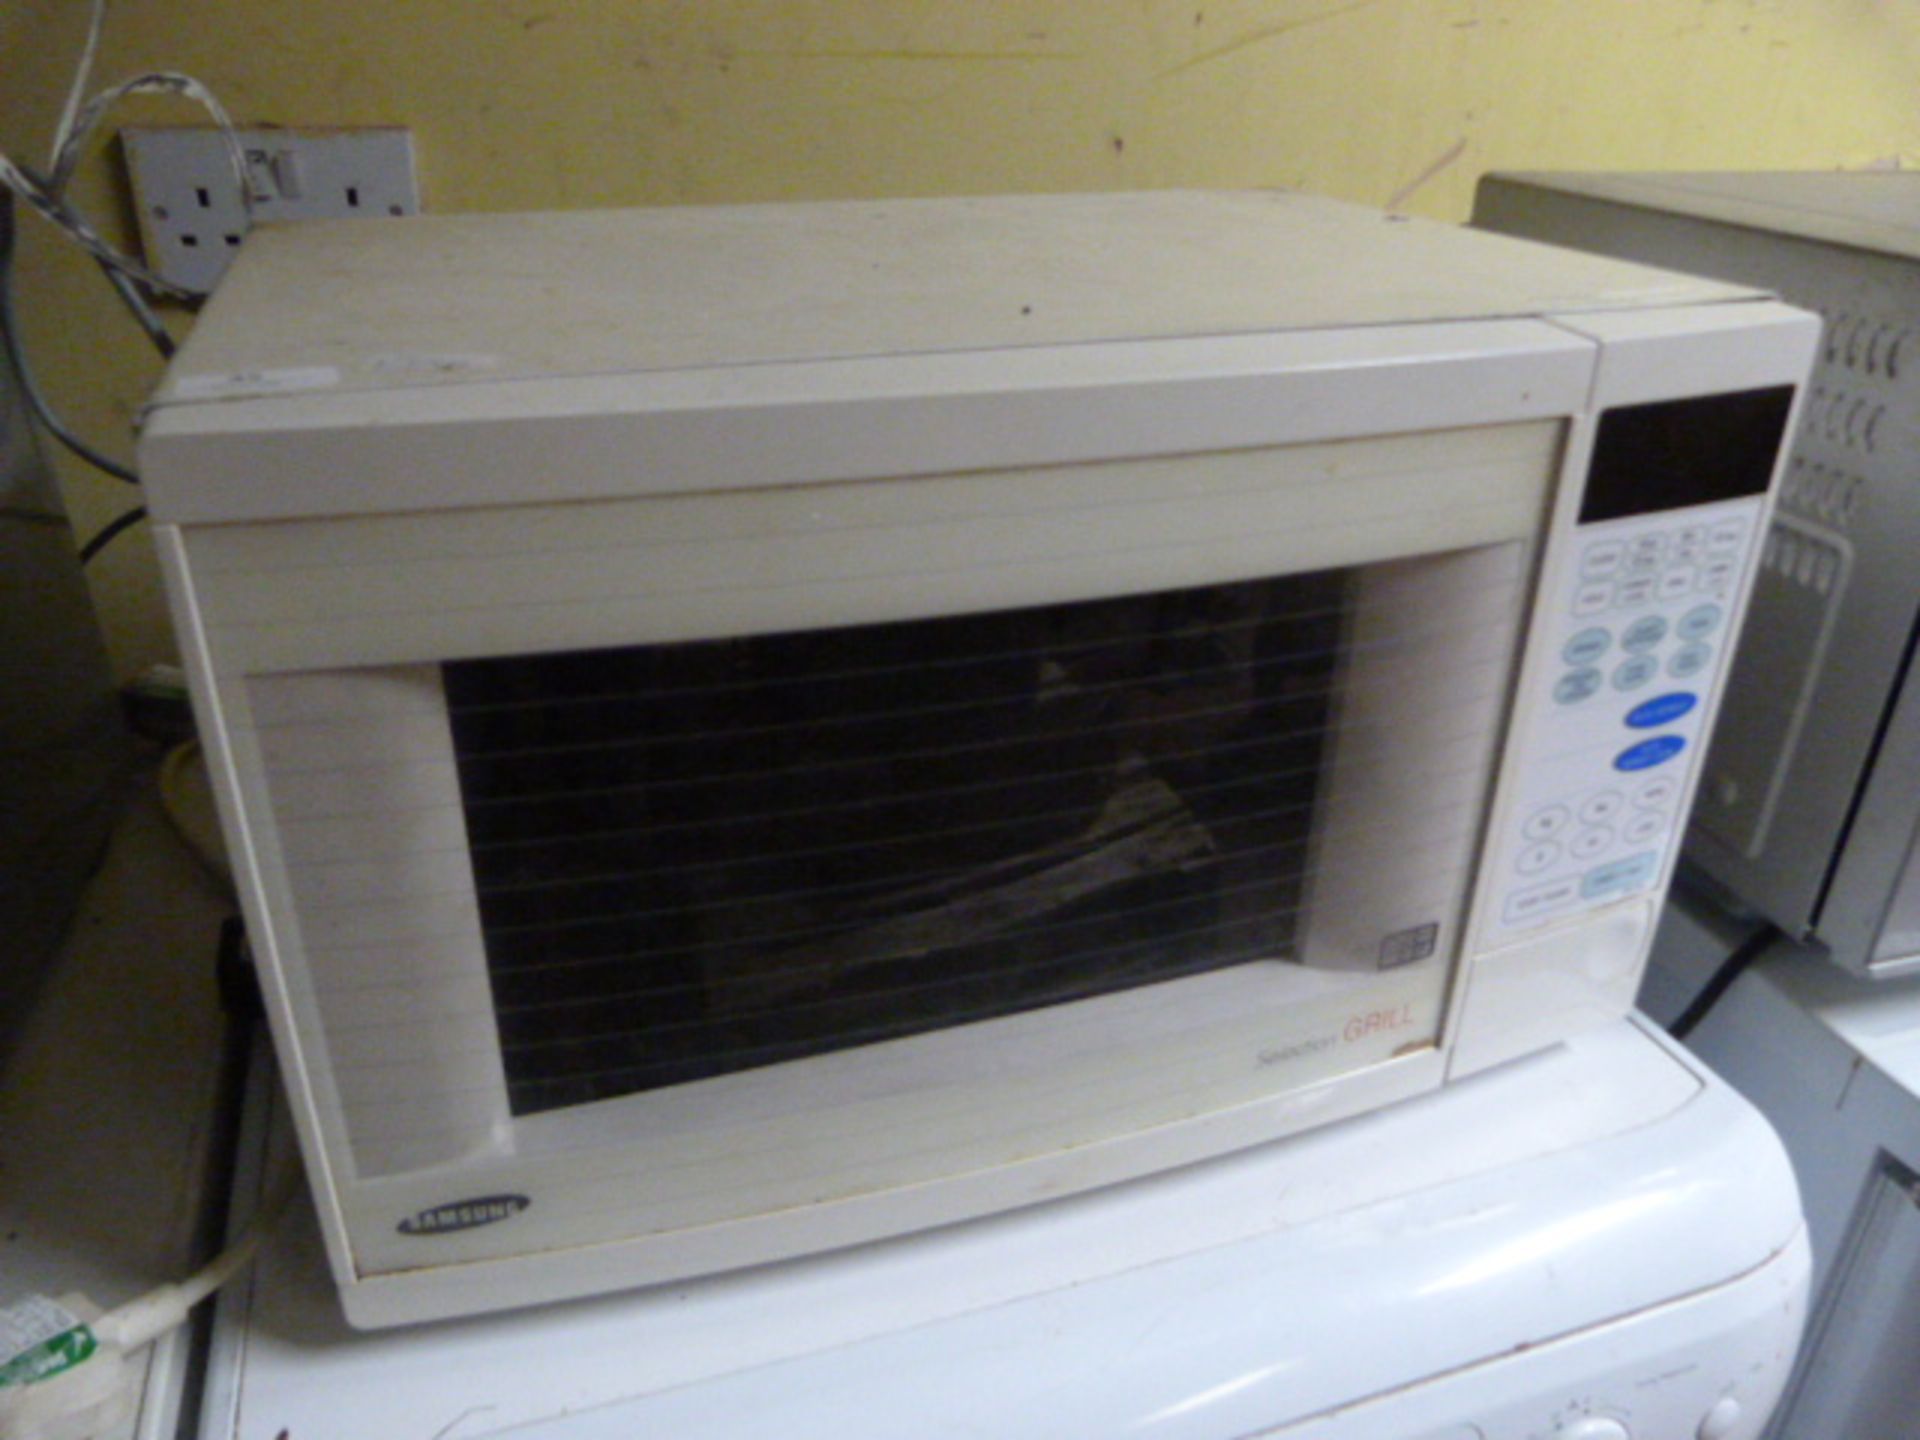 Samsung 900w Microwave Oven